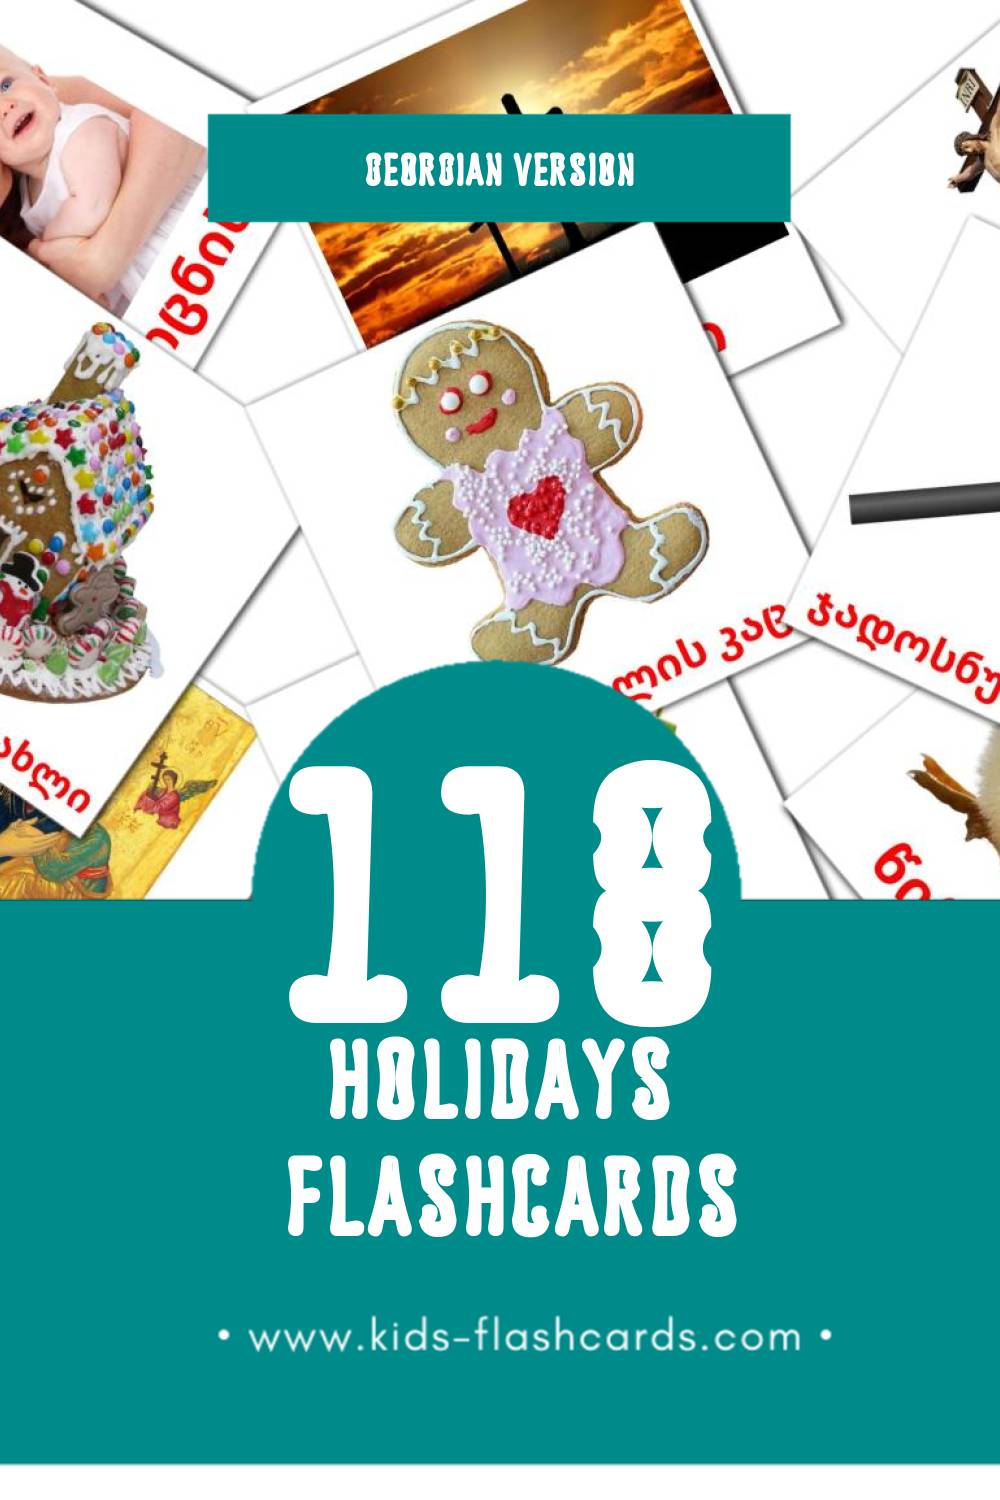 Visual დღესასწაულები Flashcards for Toddlers (118 cards in Georgian)